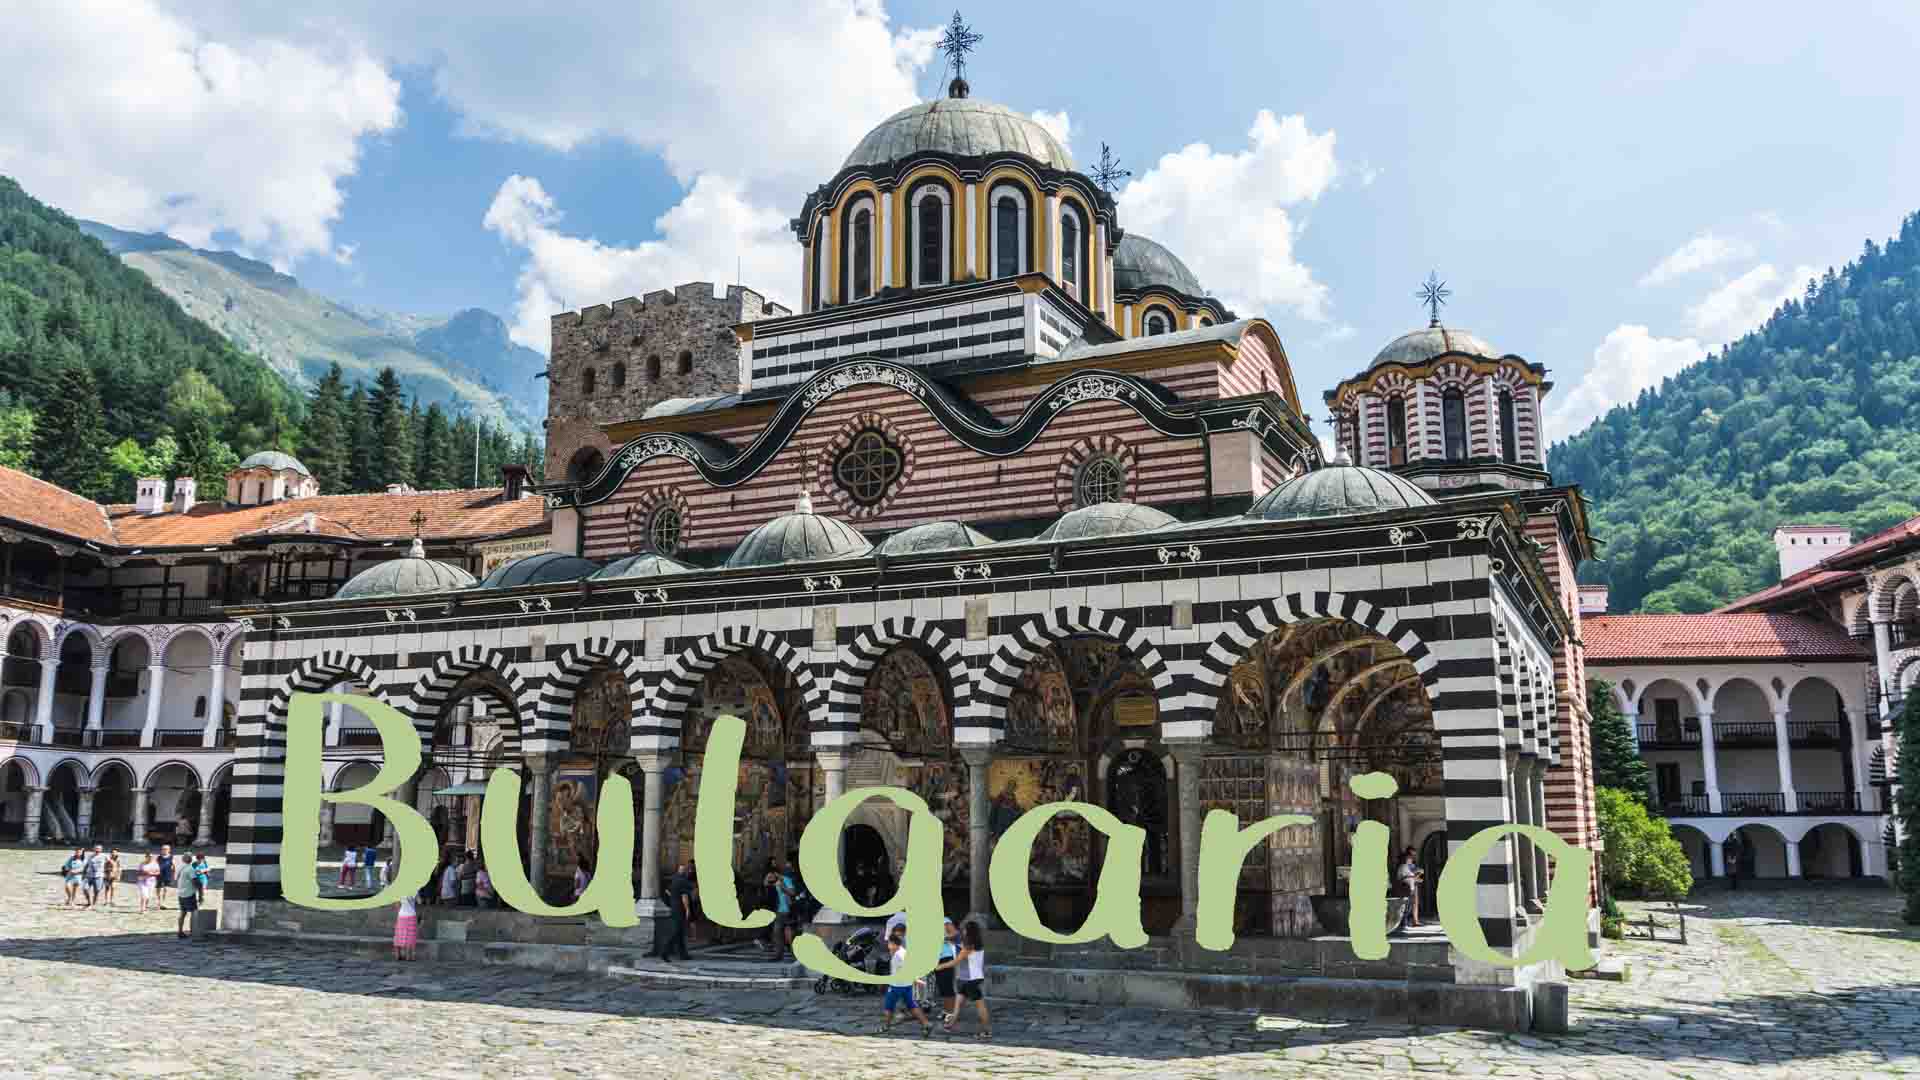 SerialHikers - Blog Voyage Alternatif SerialHikers - Voyage Engagé & Sans avion Destination Bulgarie: notre guide voyage Bulgarie, Europe Balkans, Destinations